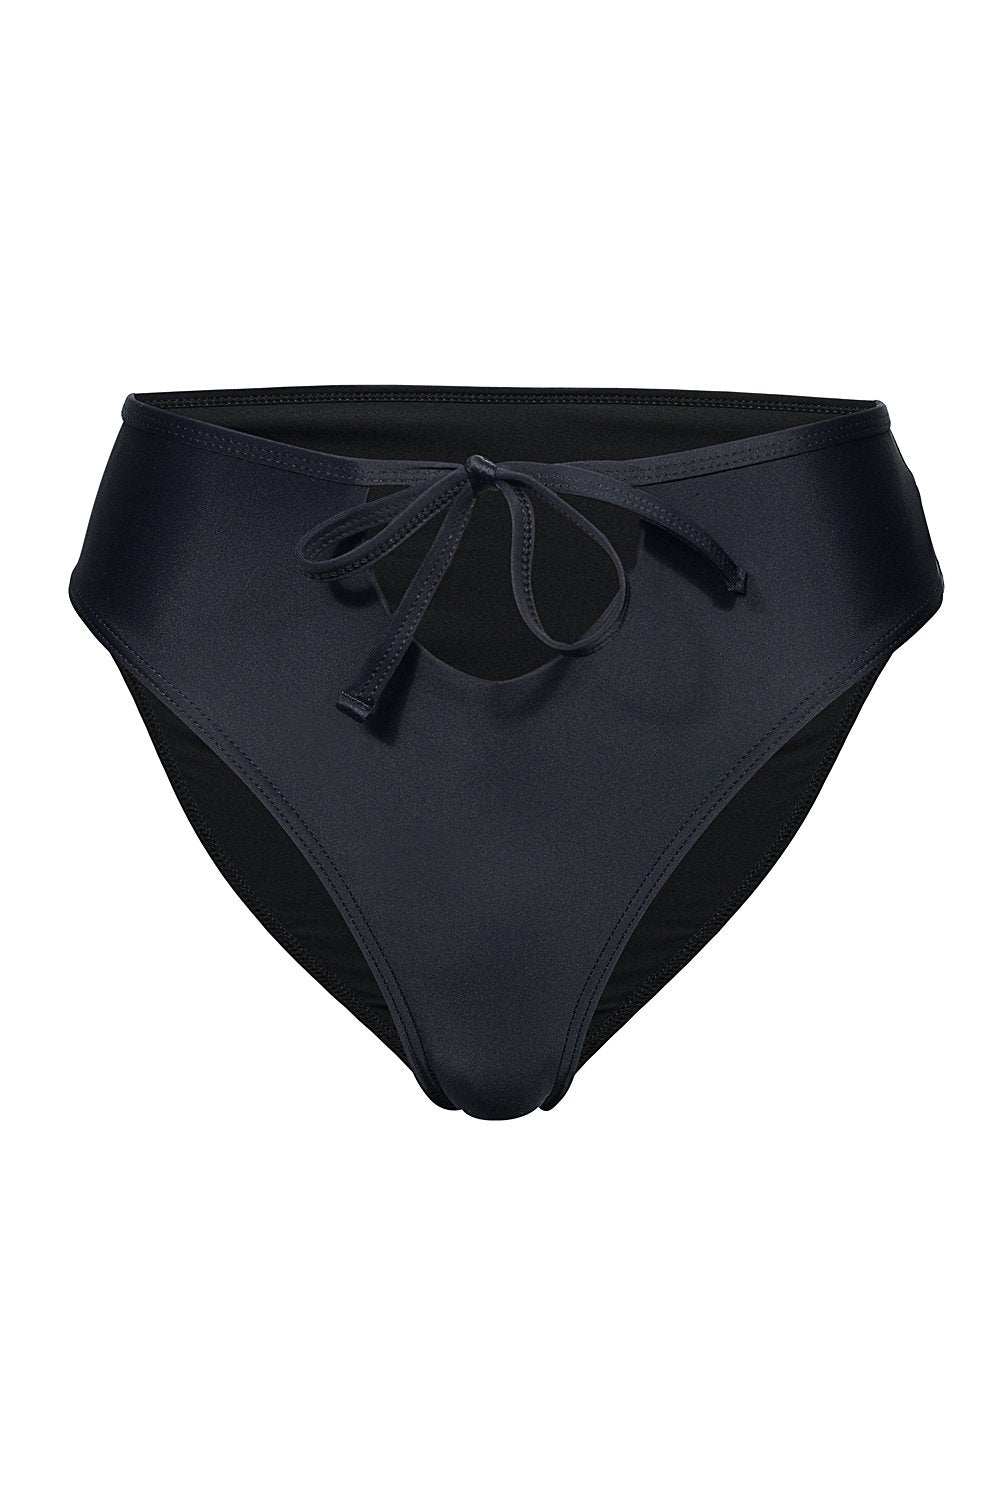 tie front bottom black bikini